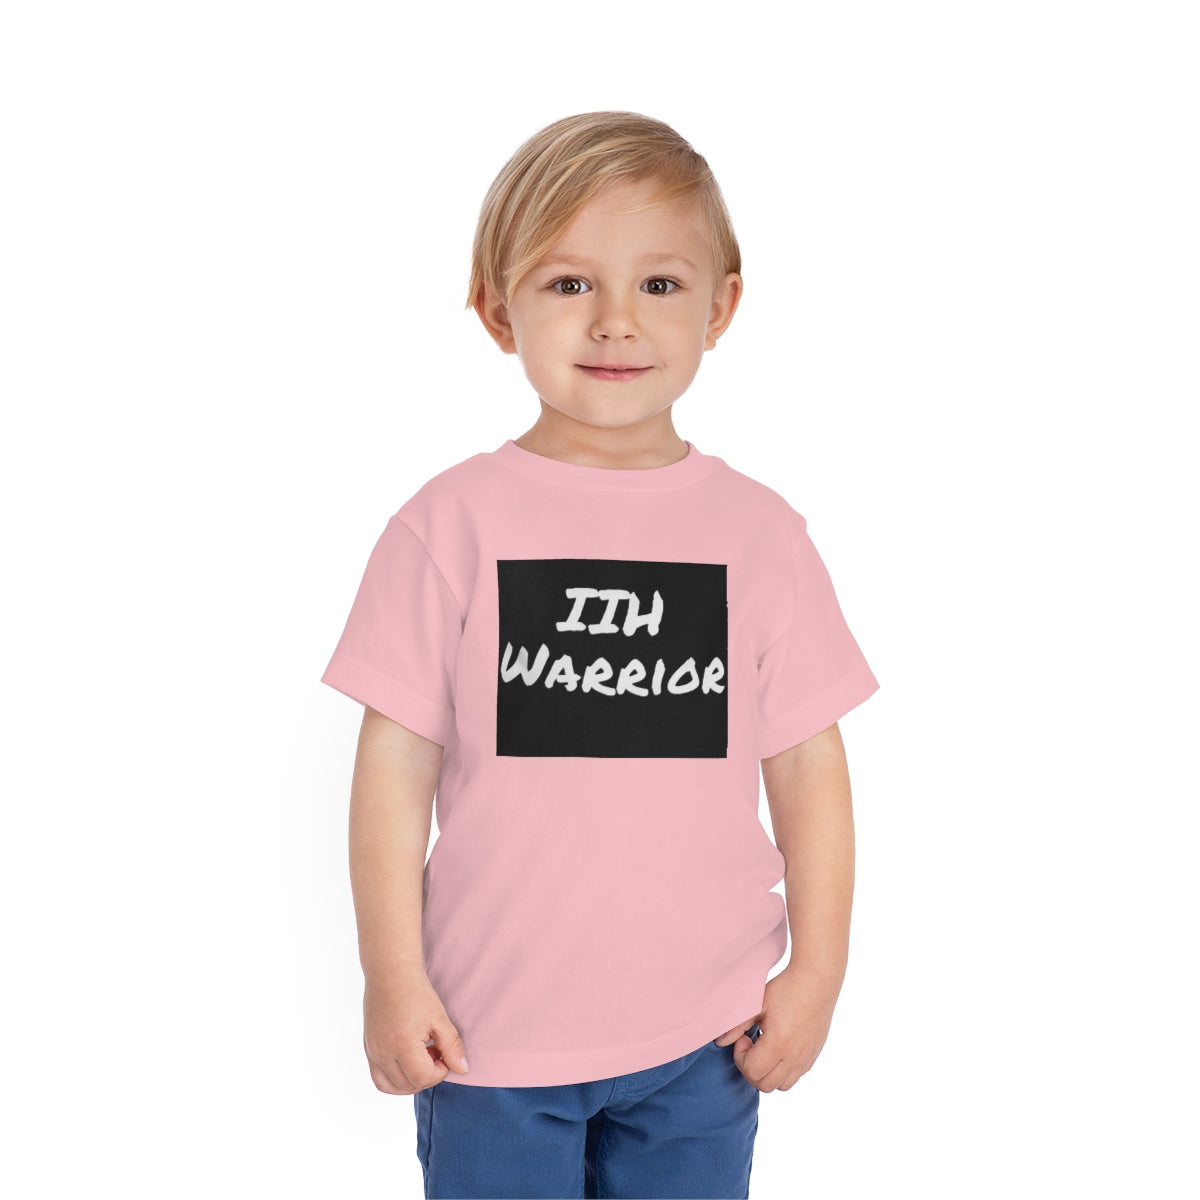 IIH Warrior - Brave -Strong -Resilient -Toddler Short Sleeve Tee